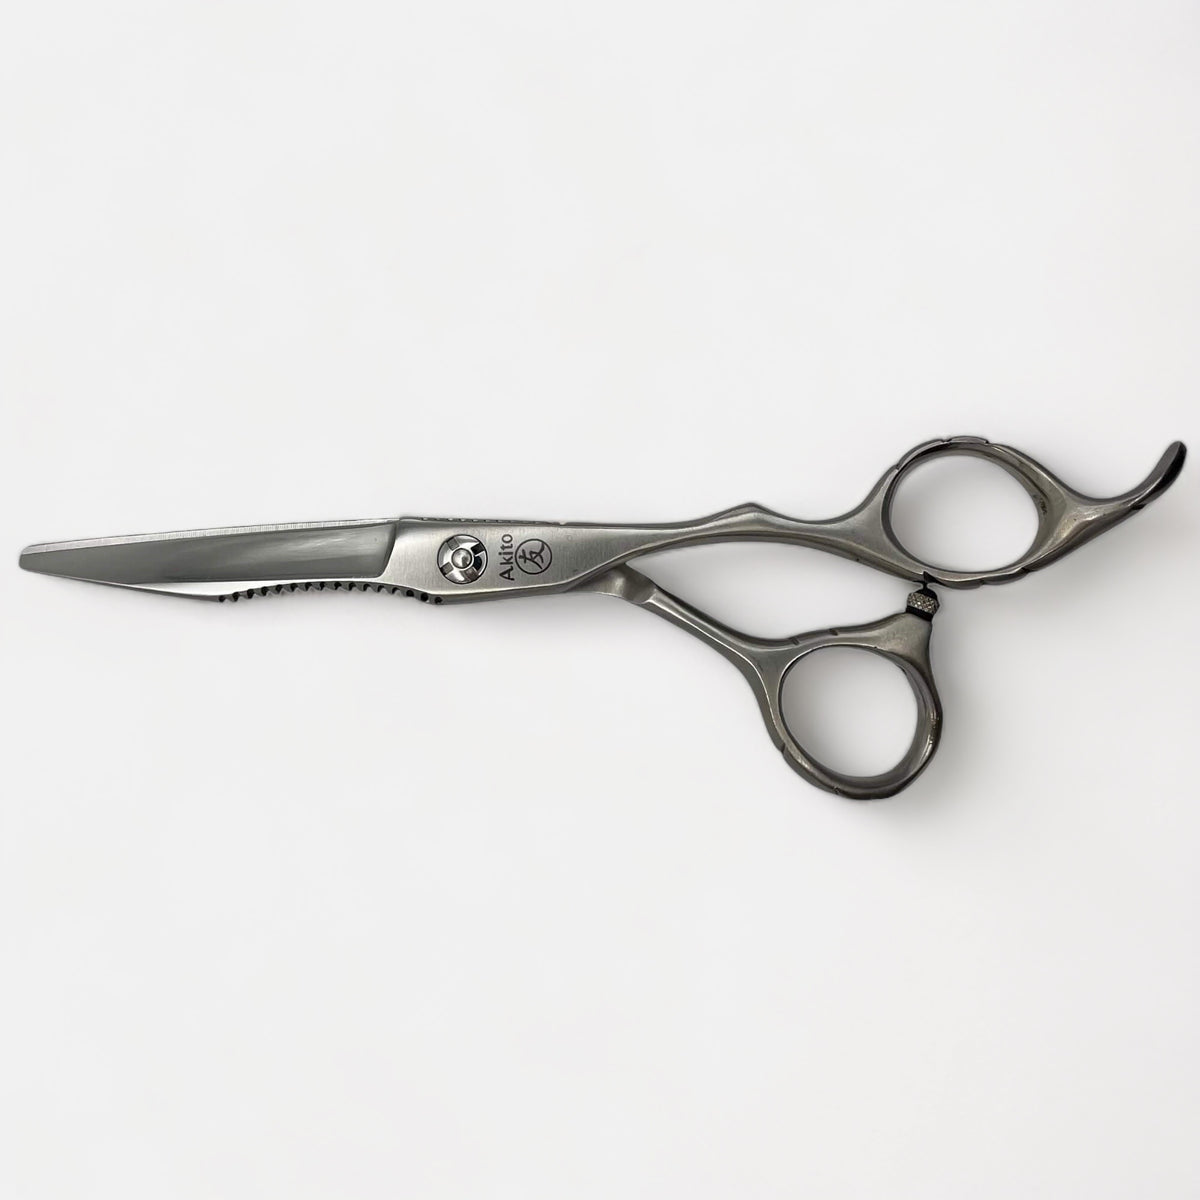 X-5 Barber Scissors Silver side blade